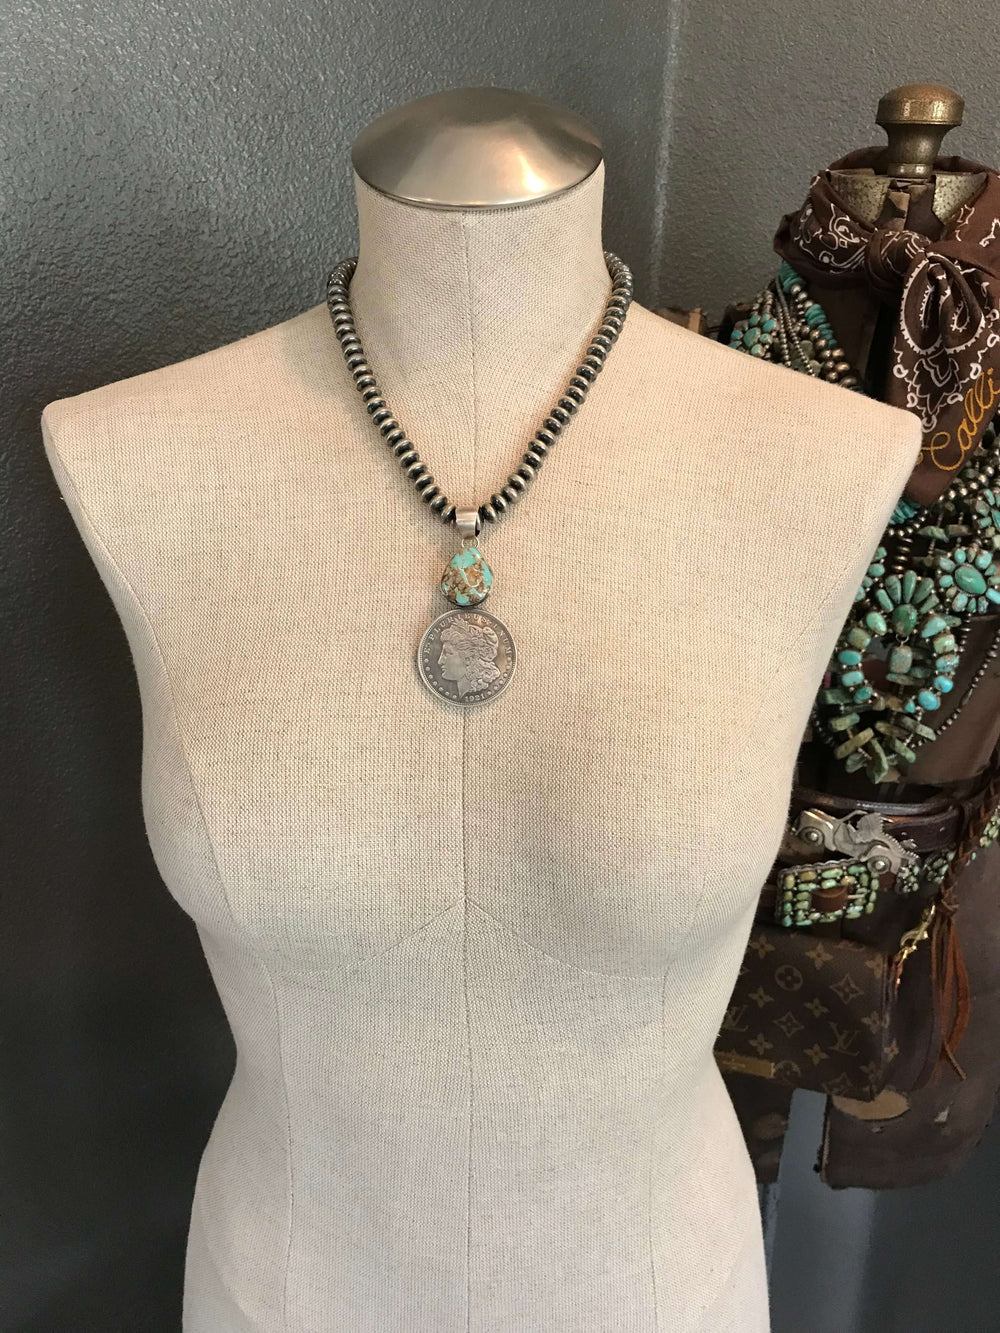 The Morgan Dollar Turquoise Pendant, 4-Pendants-Calli Co., Turquoise and Silver Jewelry, Native American Handmade, Zuni Tribe, Navajo Tribe, Brock Texas